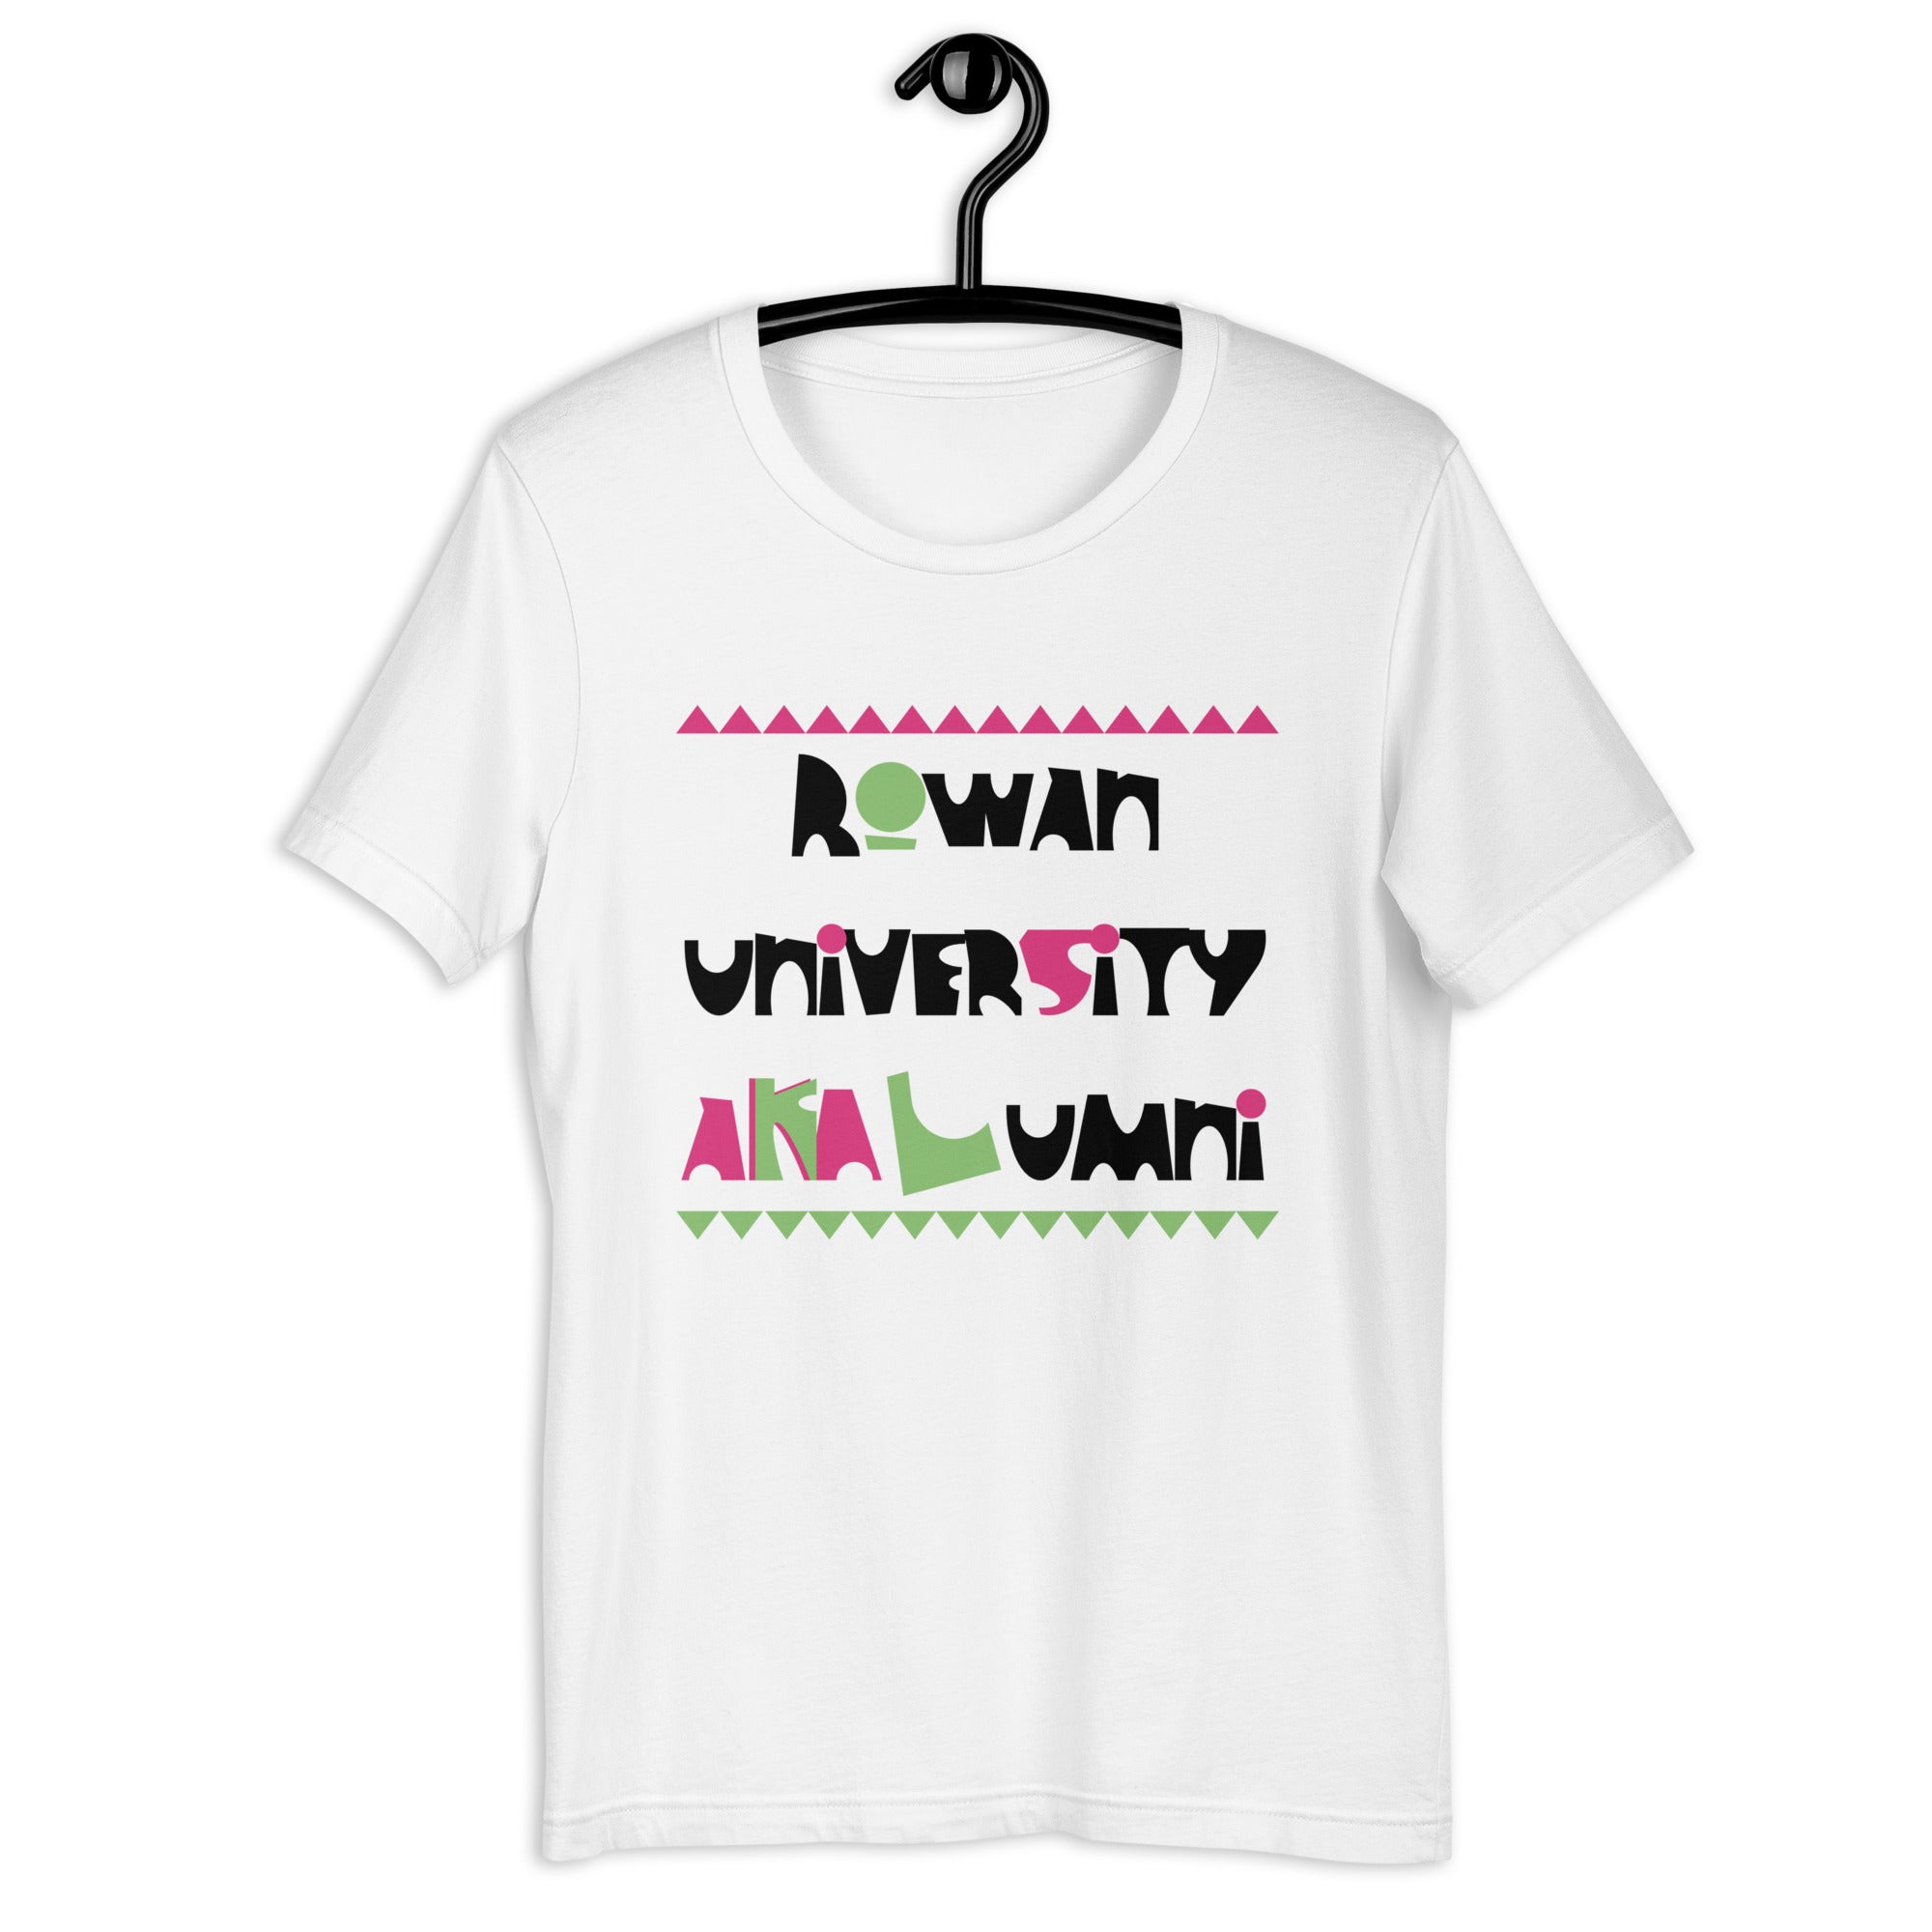 Rowan University AKAlumni Unisex t-shirt